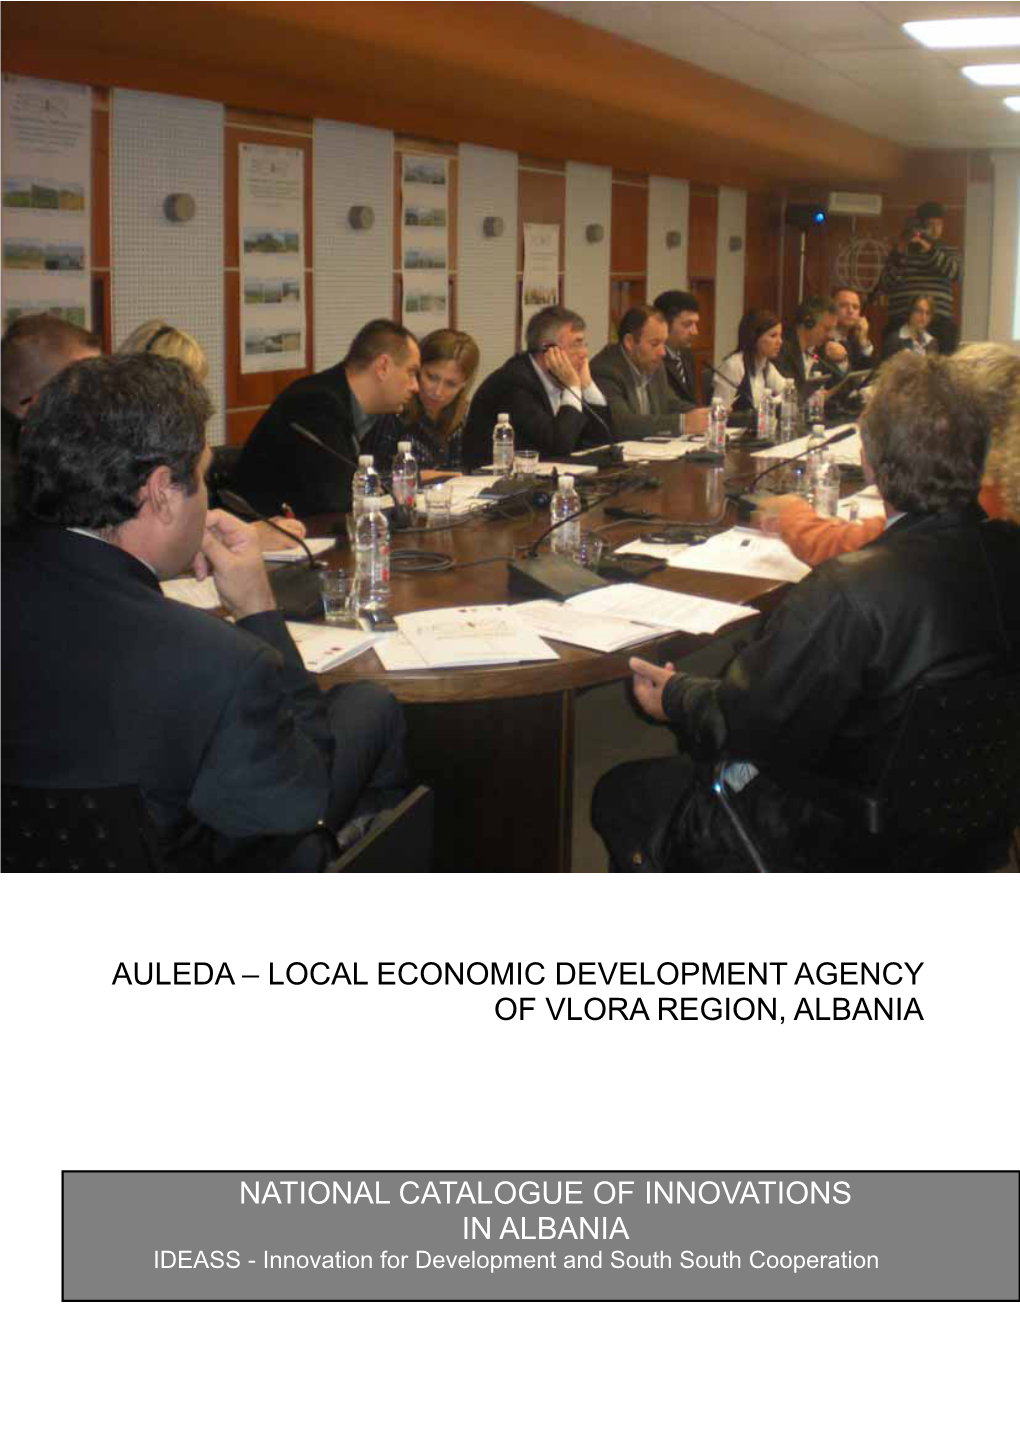 Local Economic Development Agency of Vlora Region, Albania